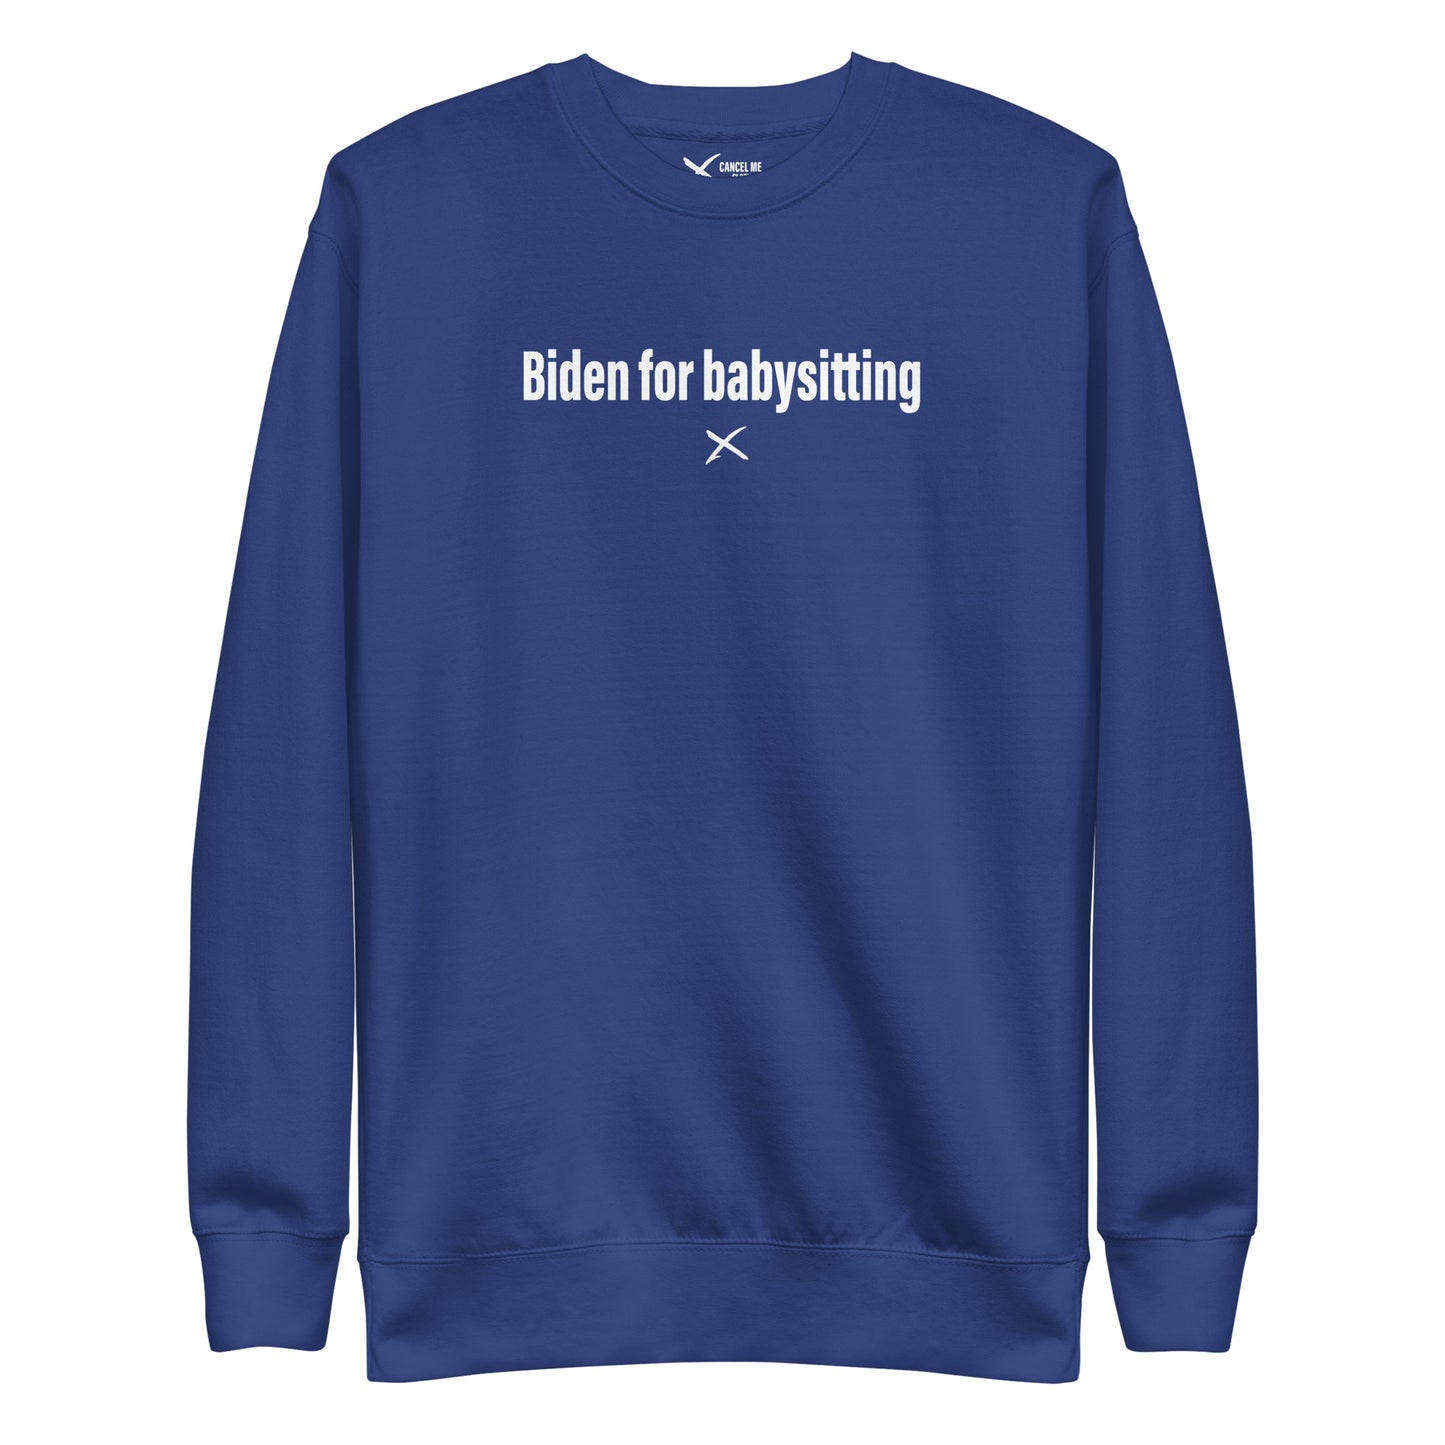 Biden for babysitting - Sweatshirt